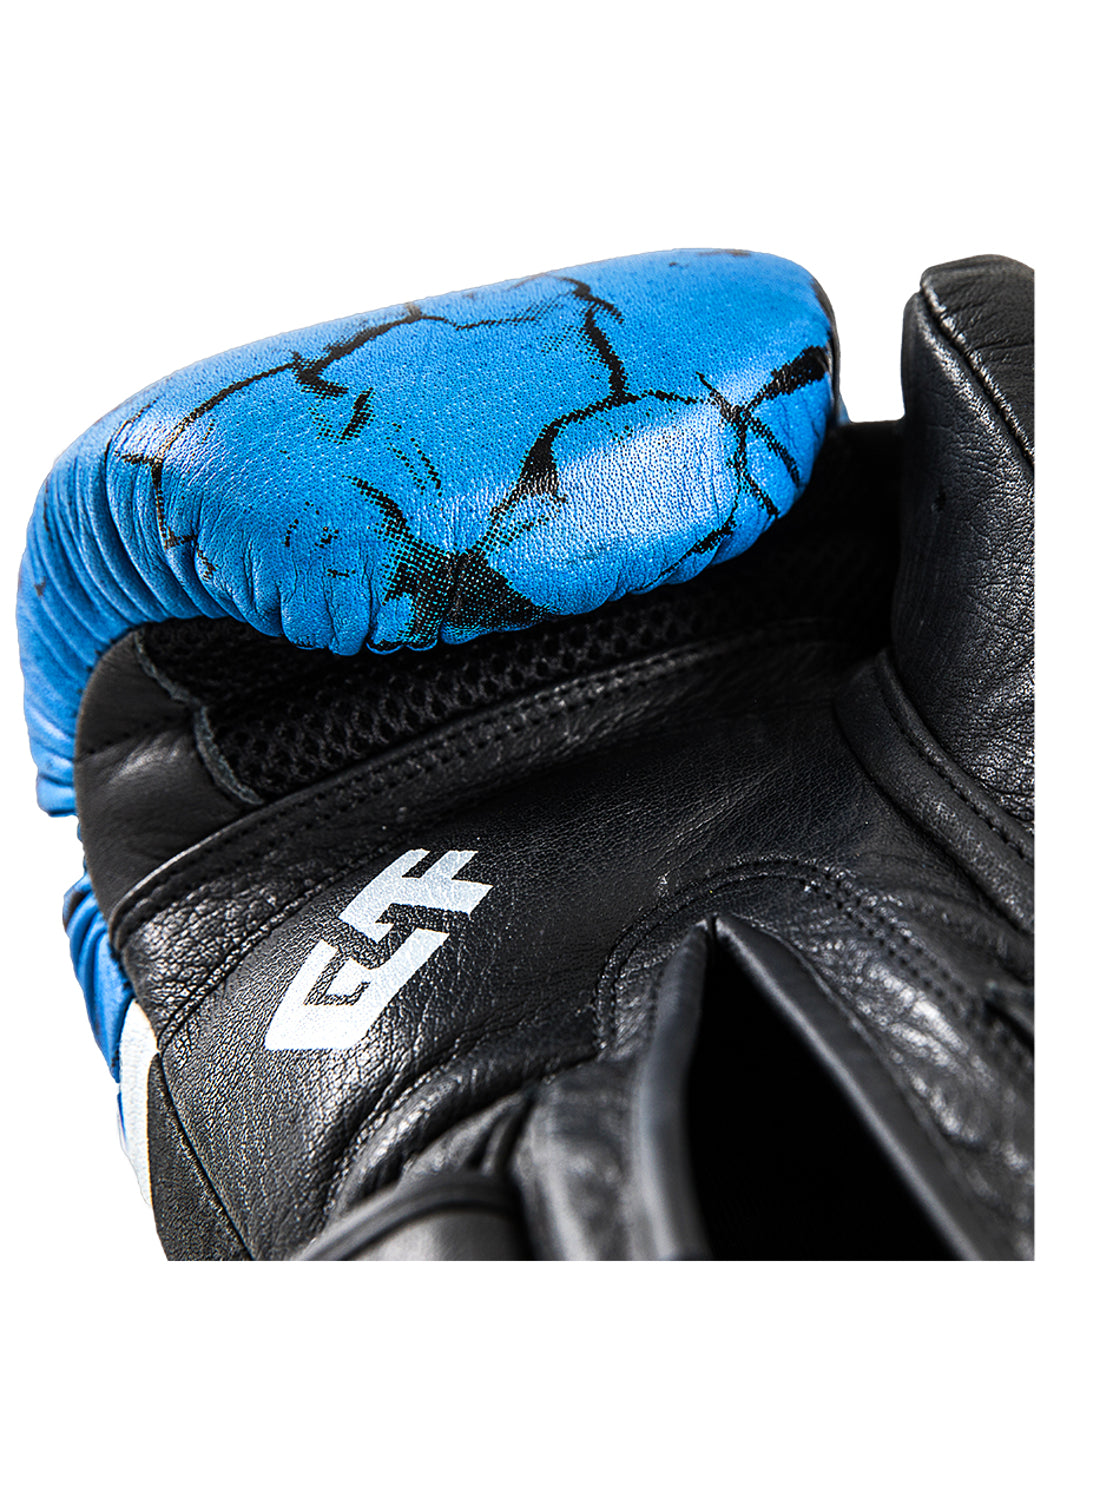 G4F Earth Original Nappa Leather Blue Kick Boxing Glove